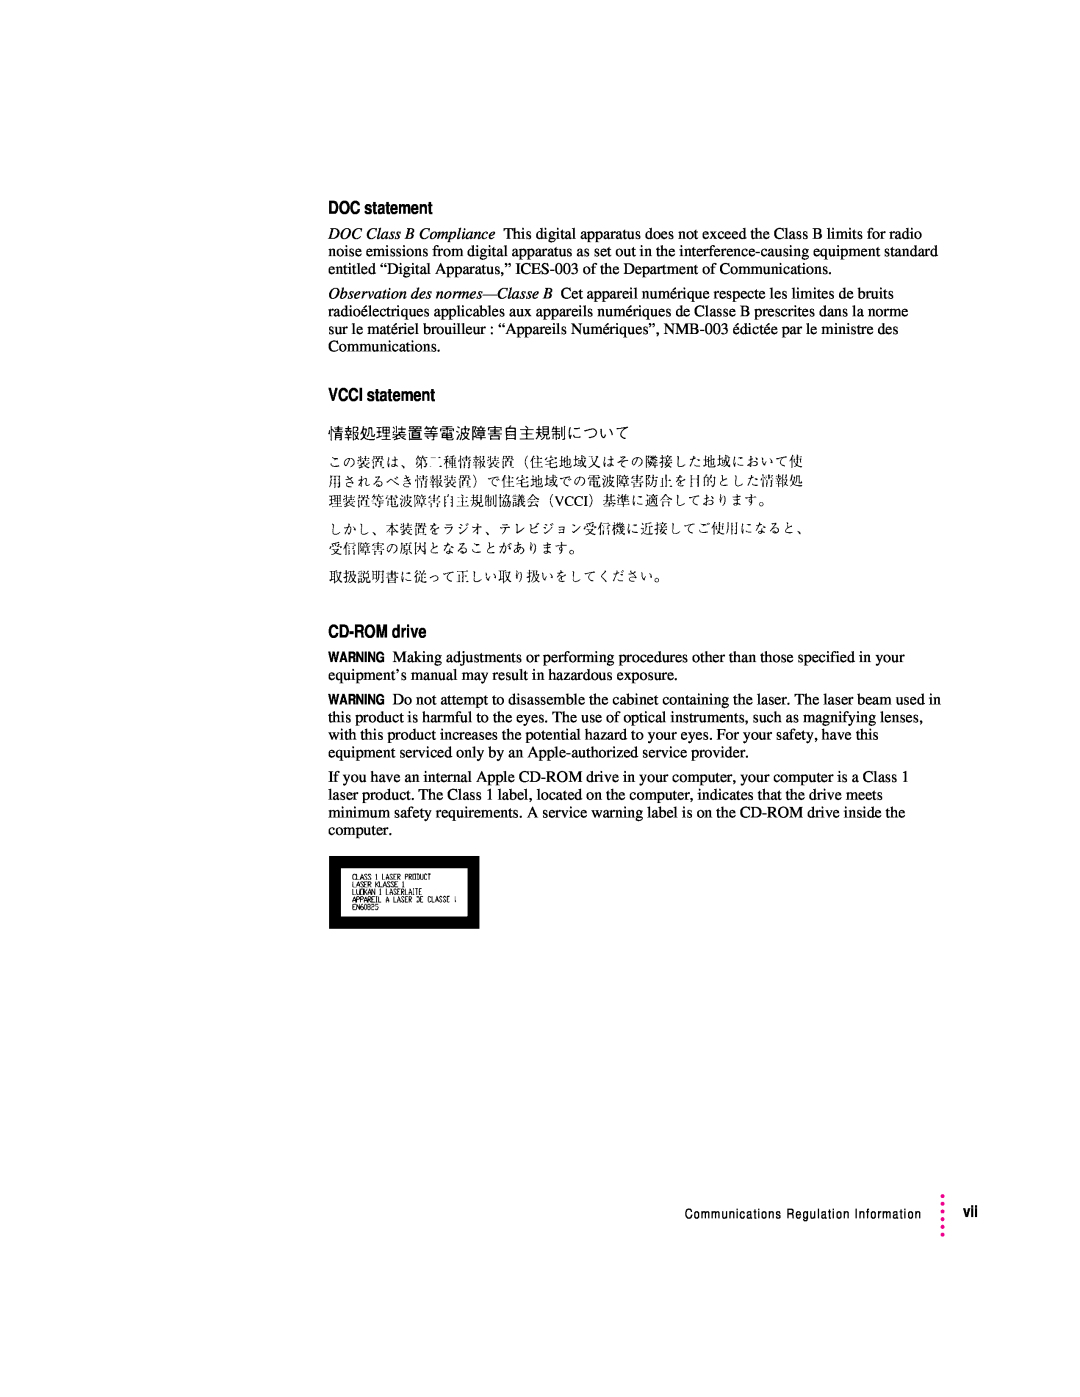 Apple 8100 Series manual DOC statement, VCCI statement CD-ROM drive, Communications Regulation Information 